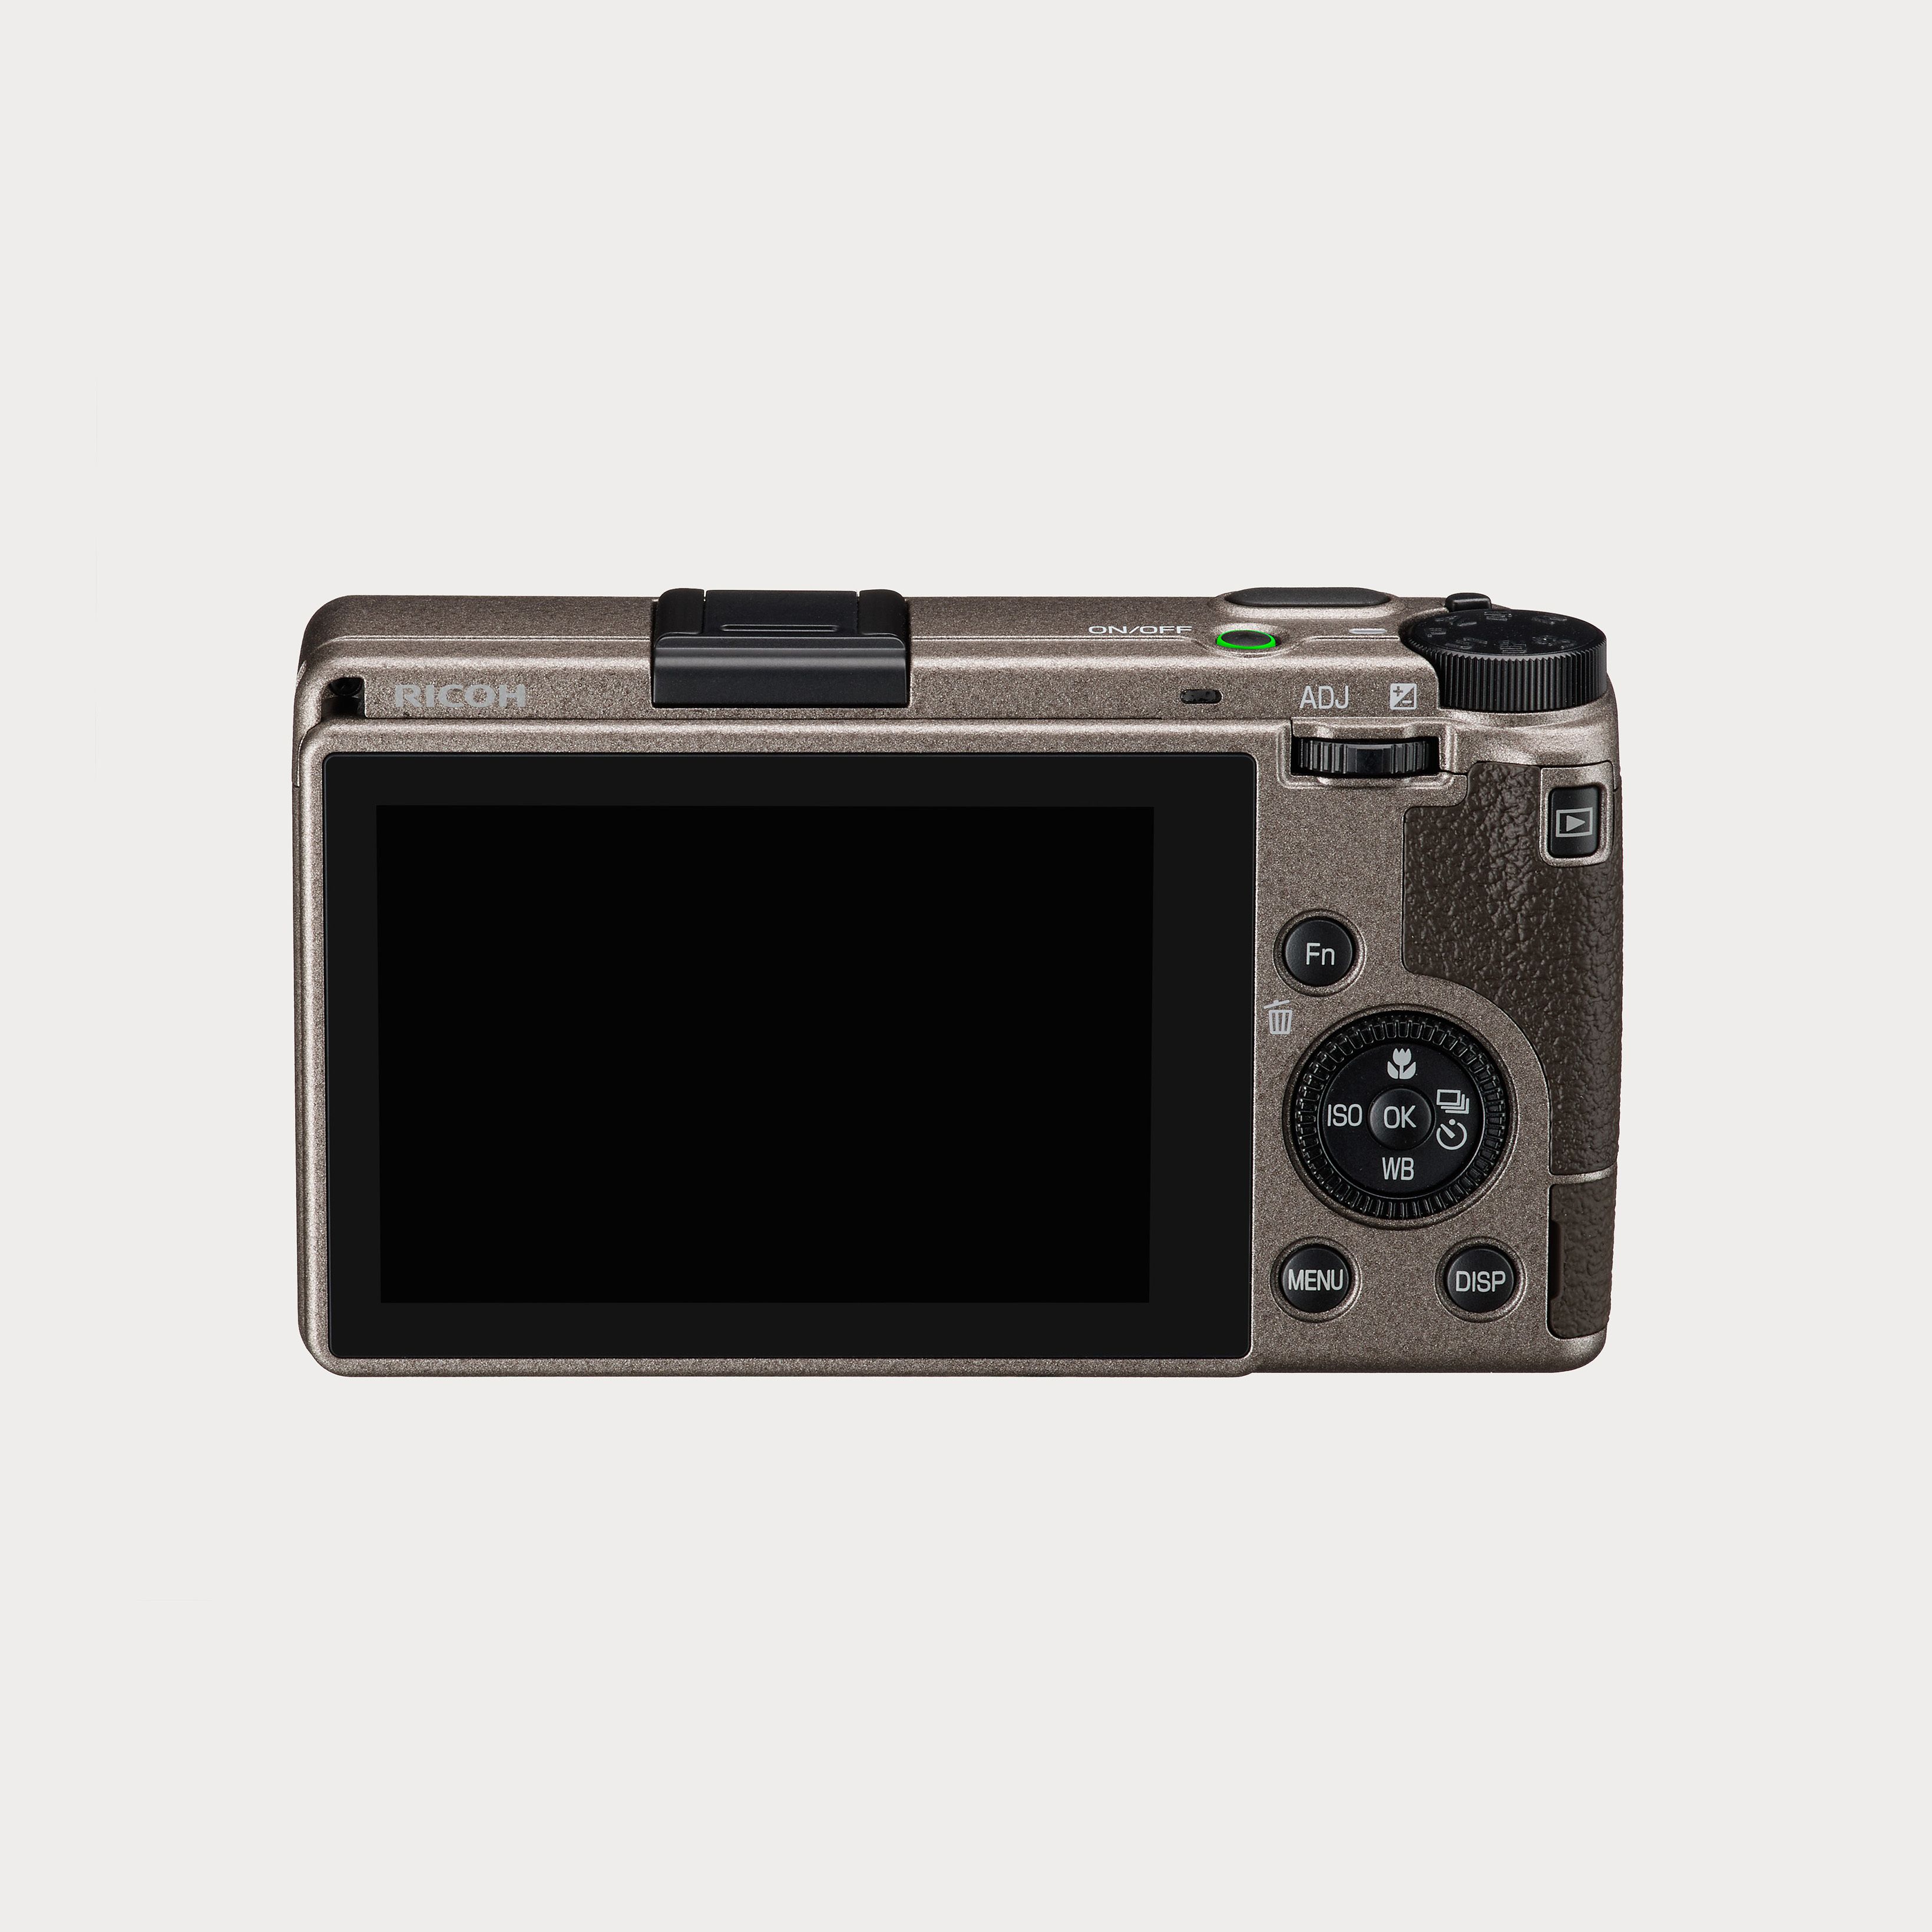 Ricoh GR III Digital Camera - Diary Edition | Moment